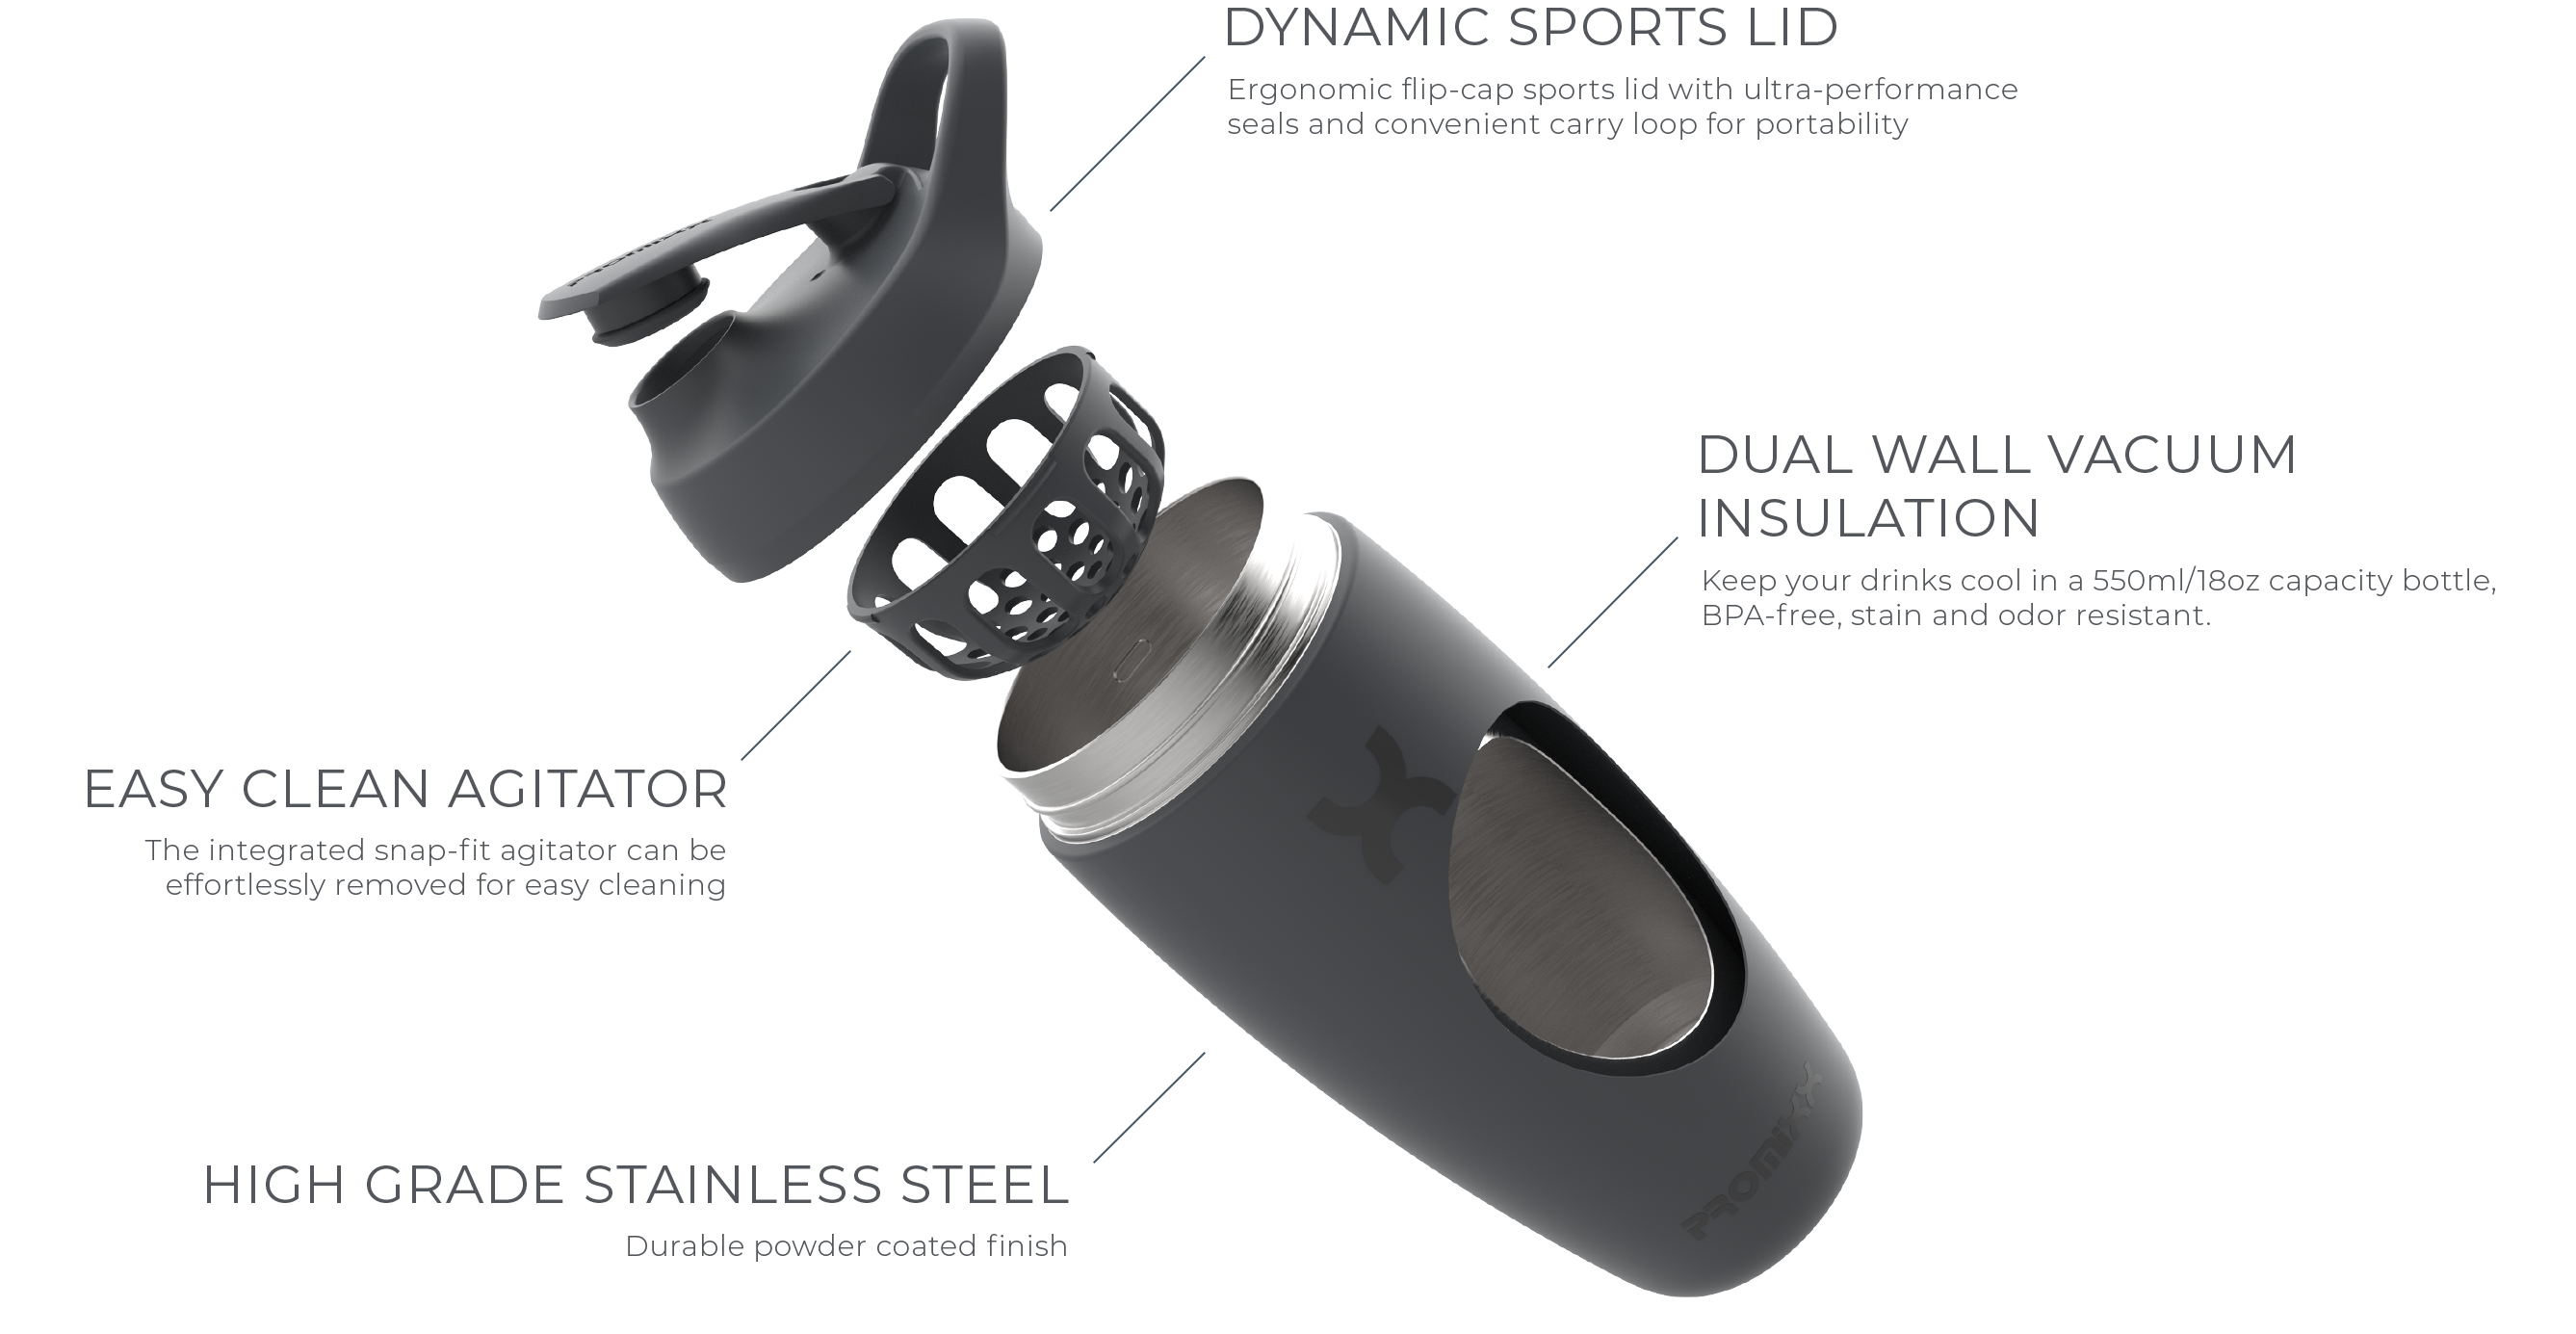 RF Odour-proof Leakproof BPA-Free PP & Stainless Steel Protein